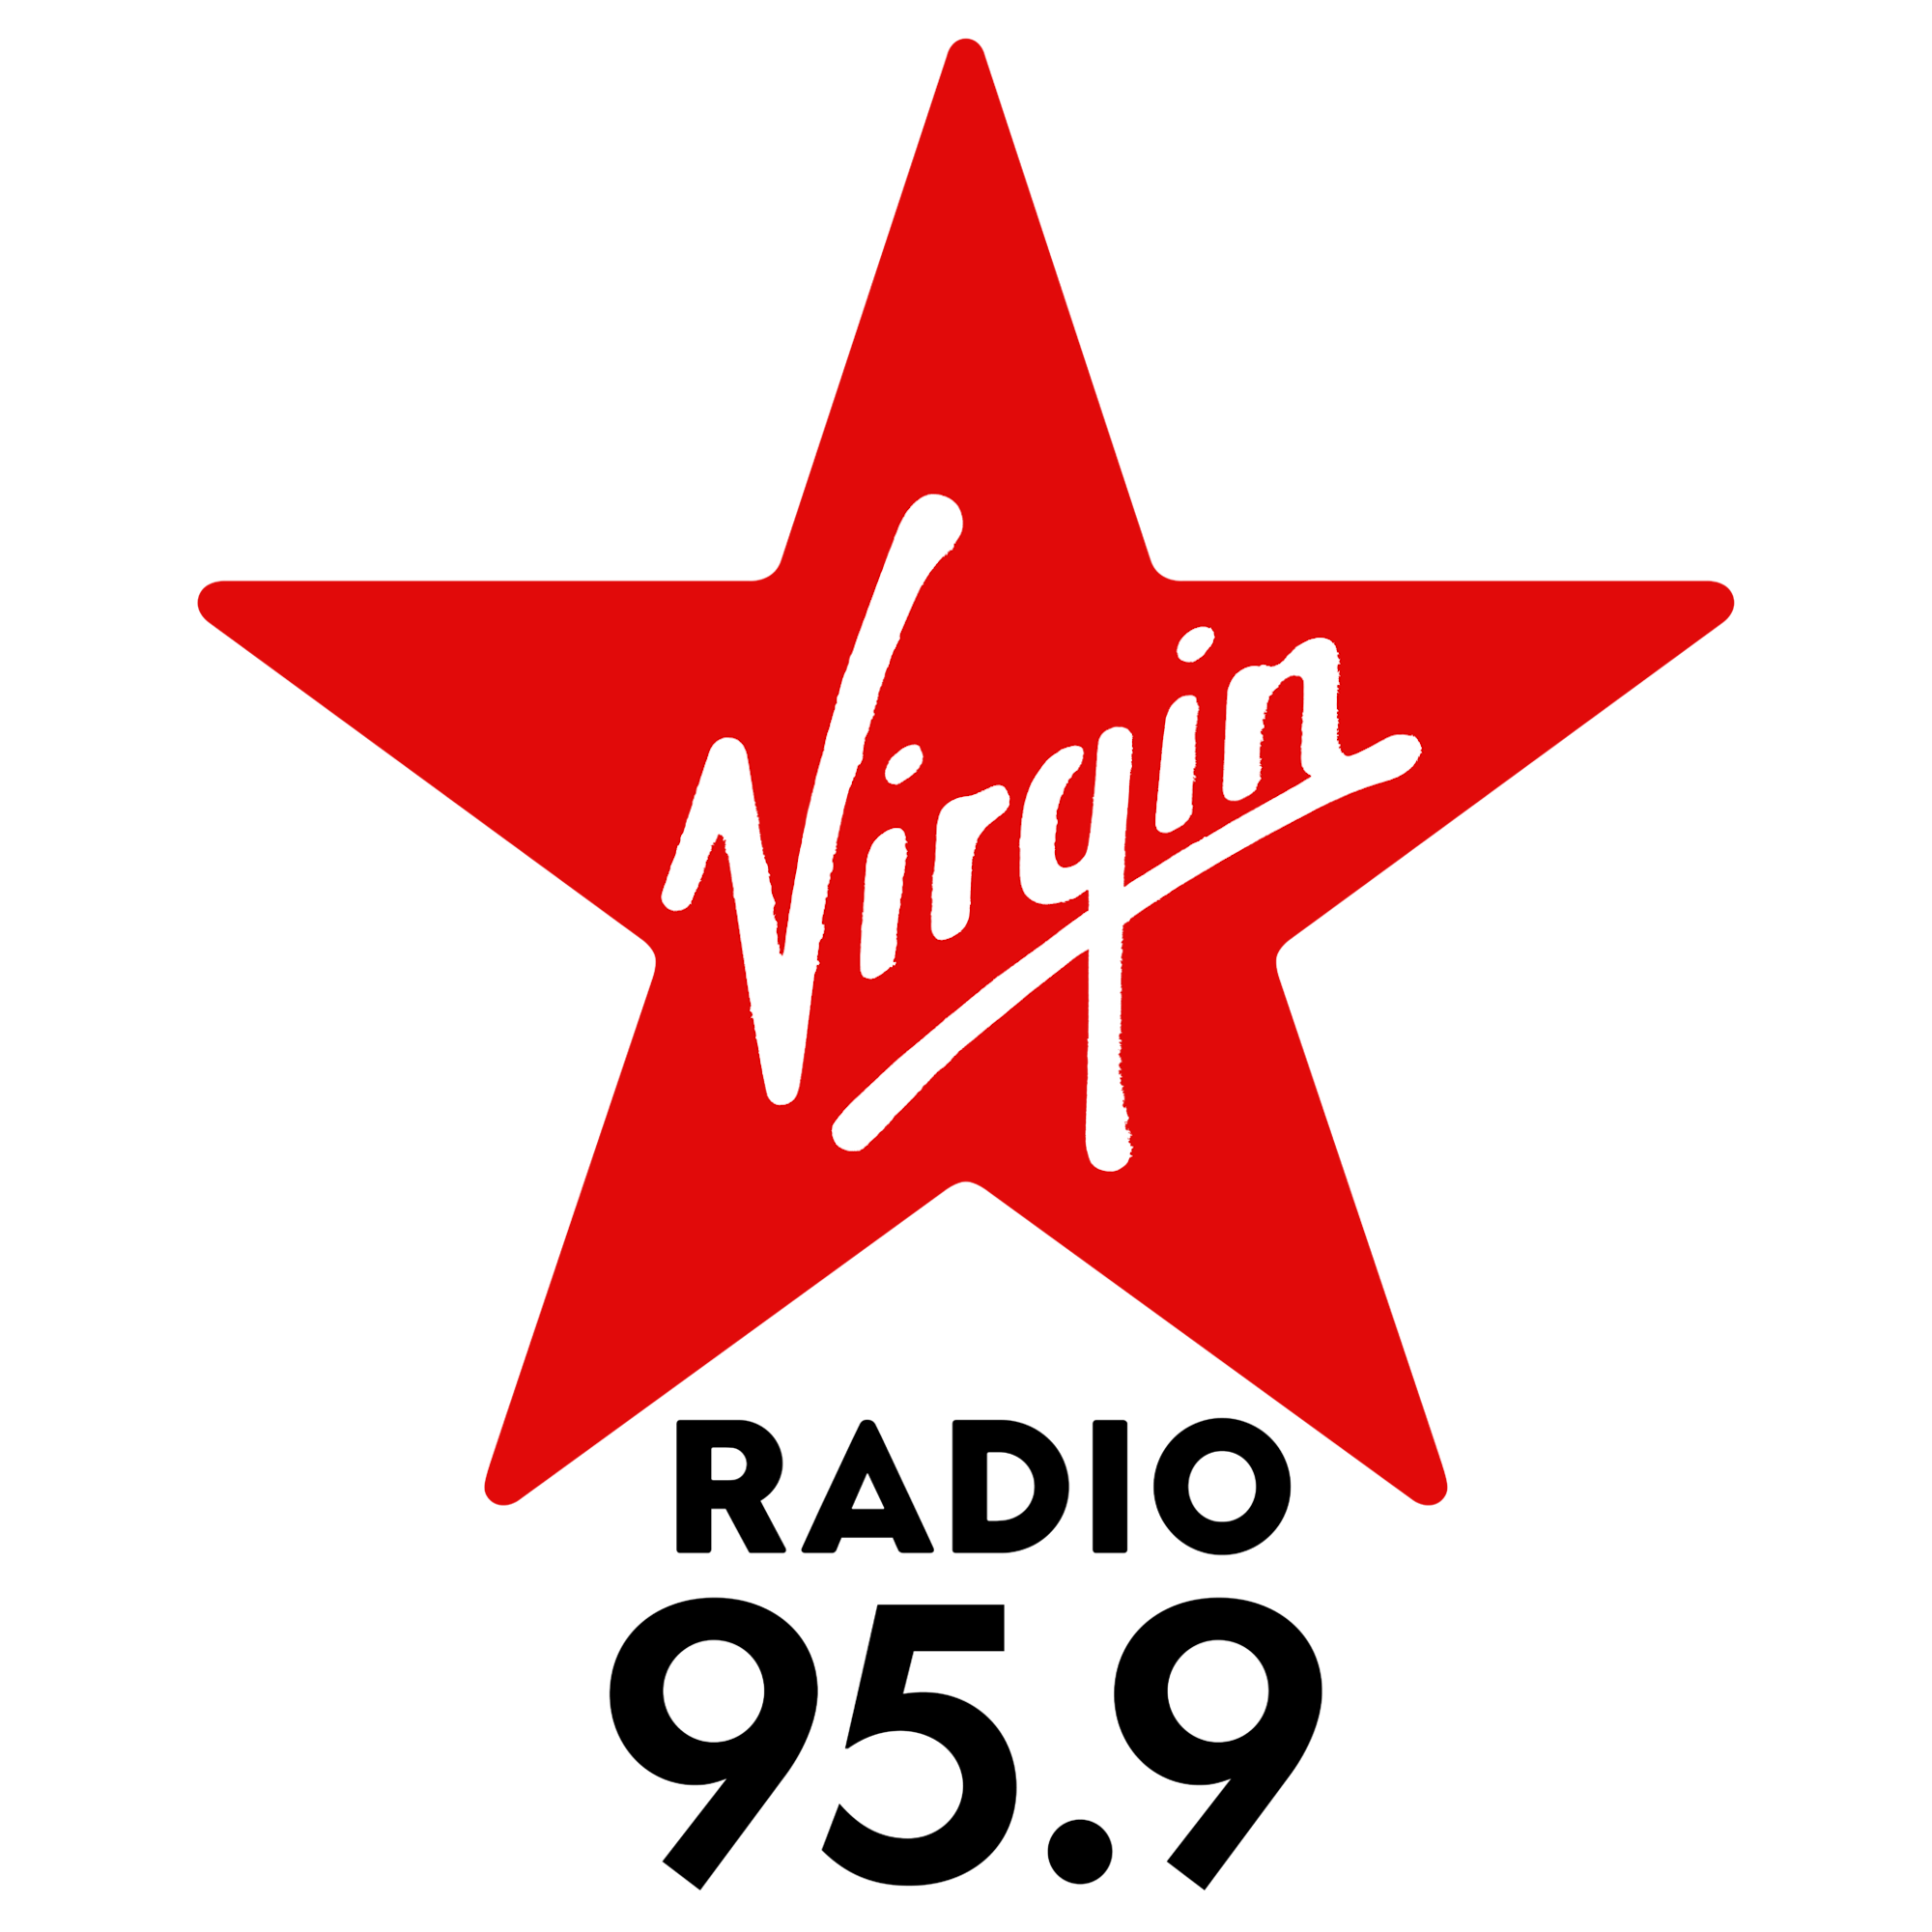 Virgin Radio 95.9 logo